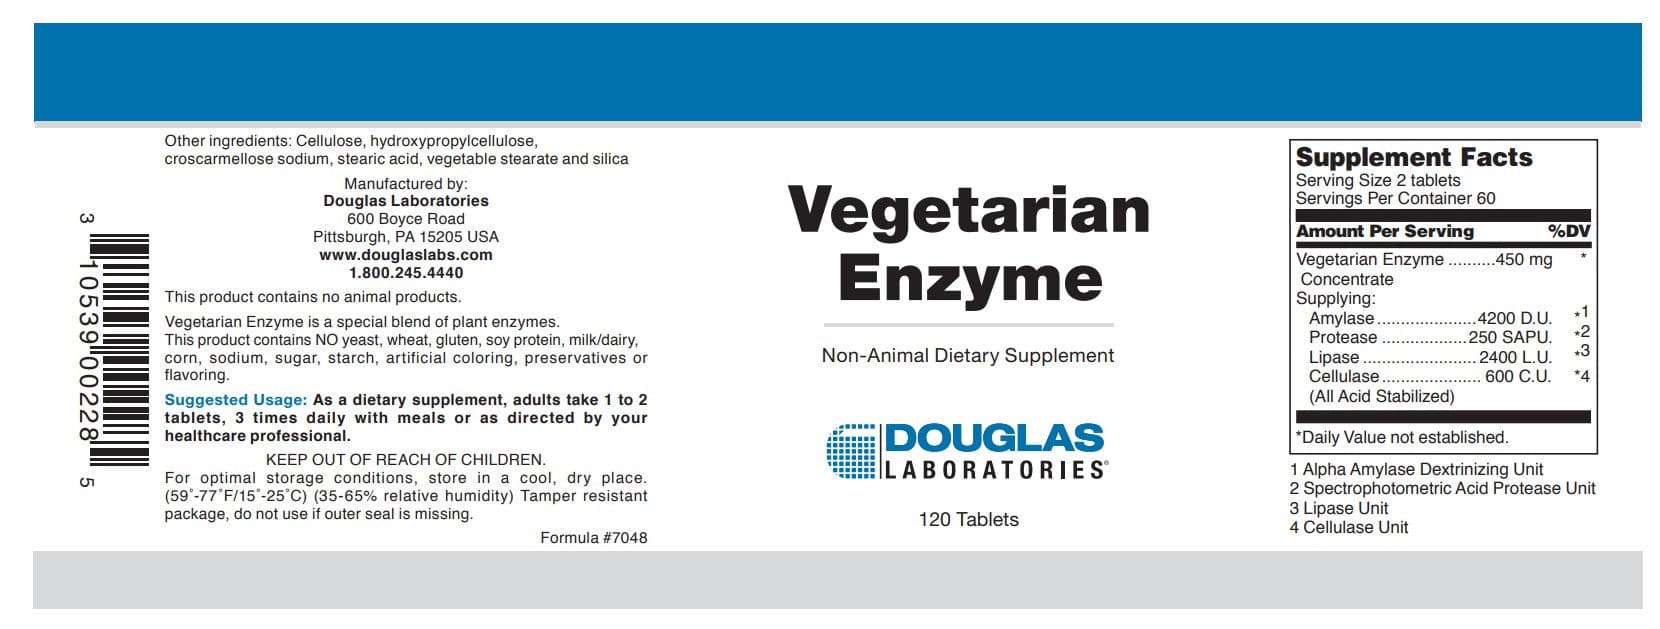 Douglas Laboratories Vegetarian Enzyme